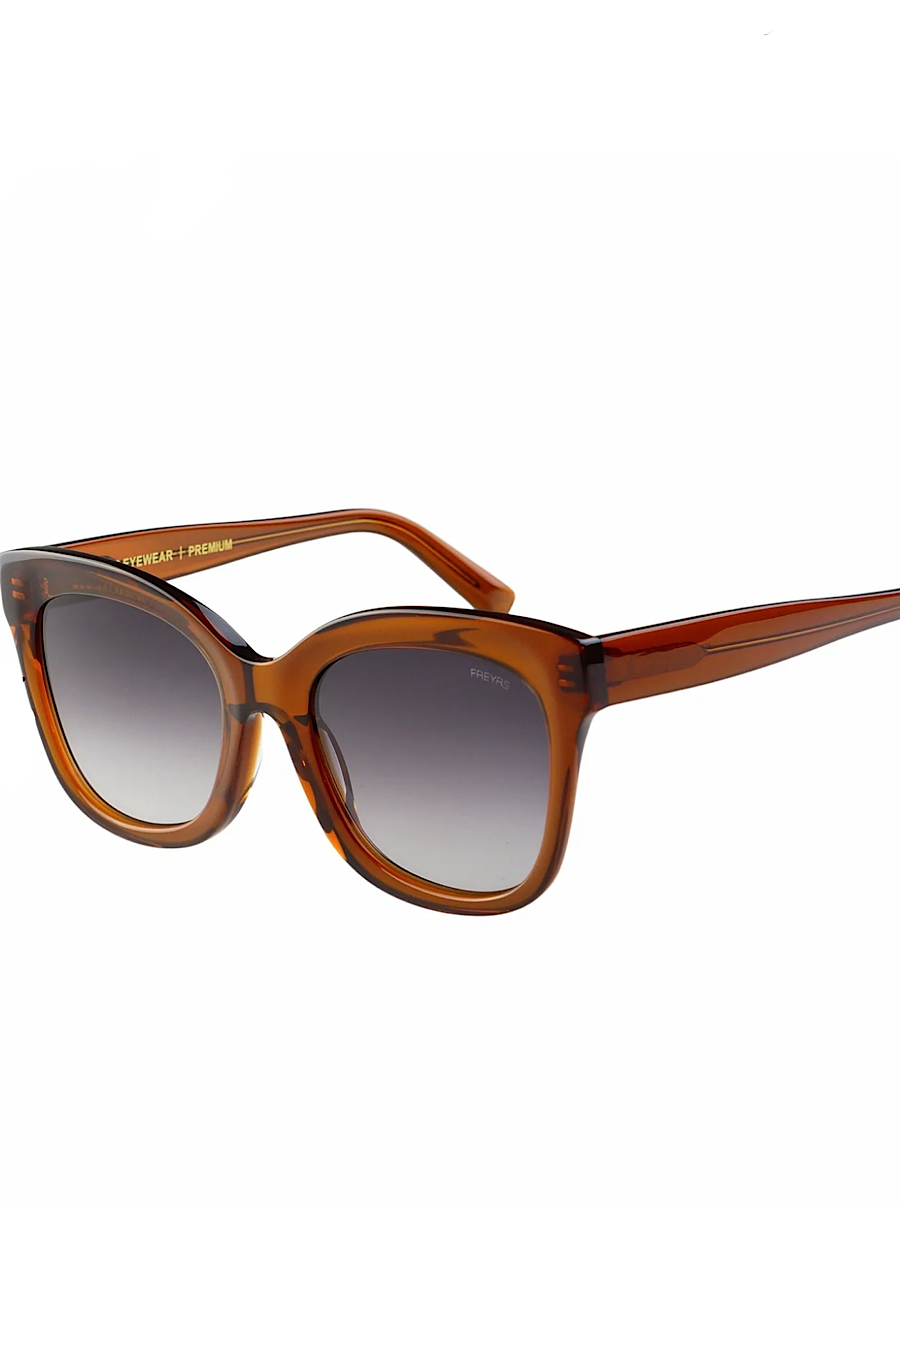 Freyrs Naples Sunglasses Brown